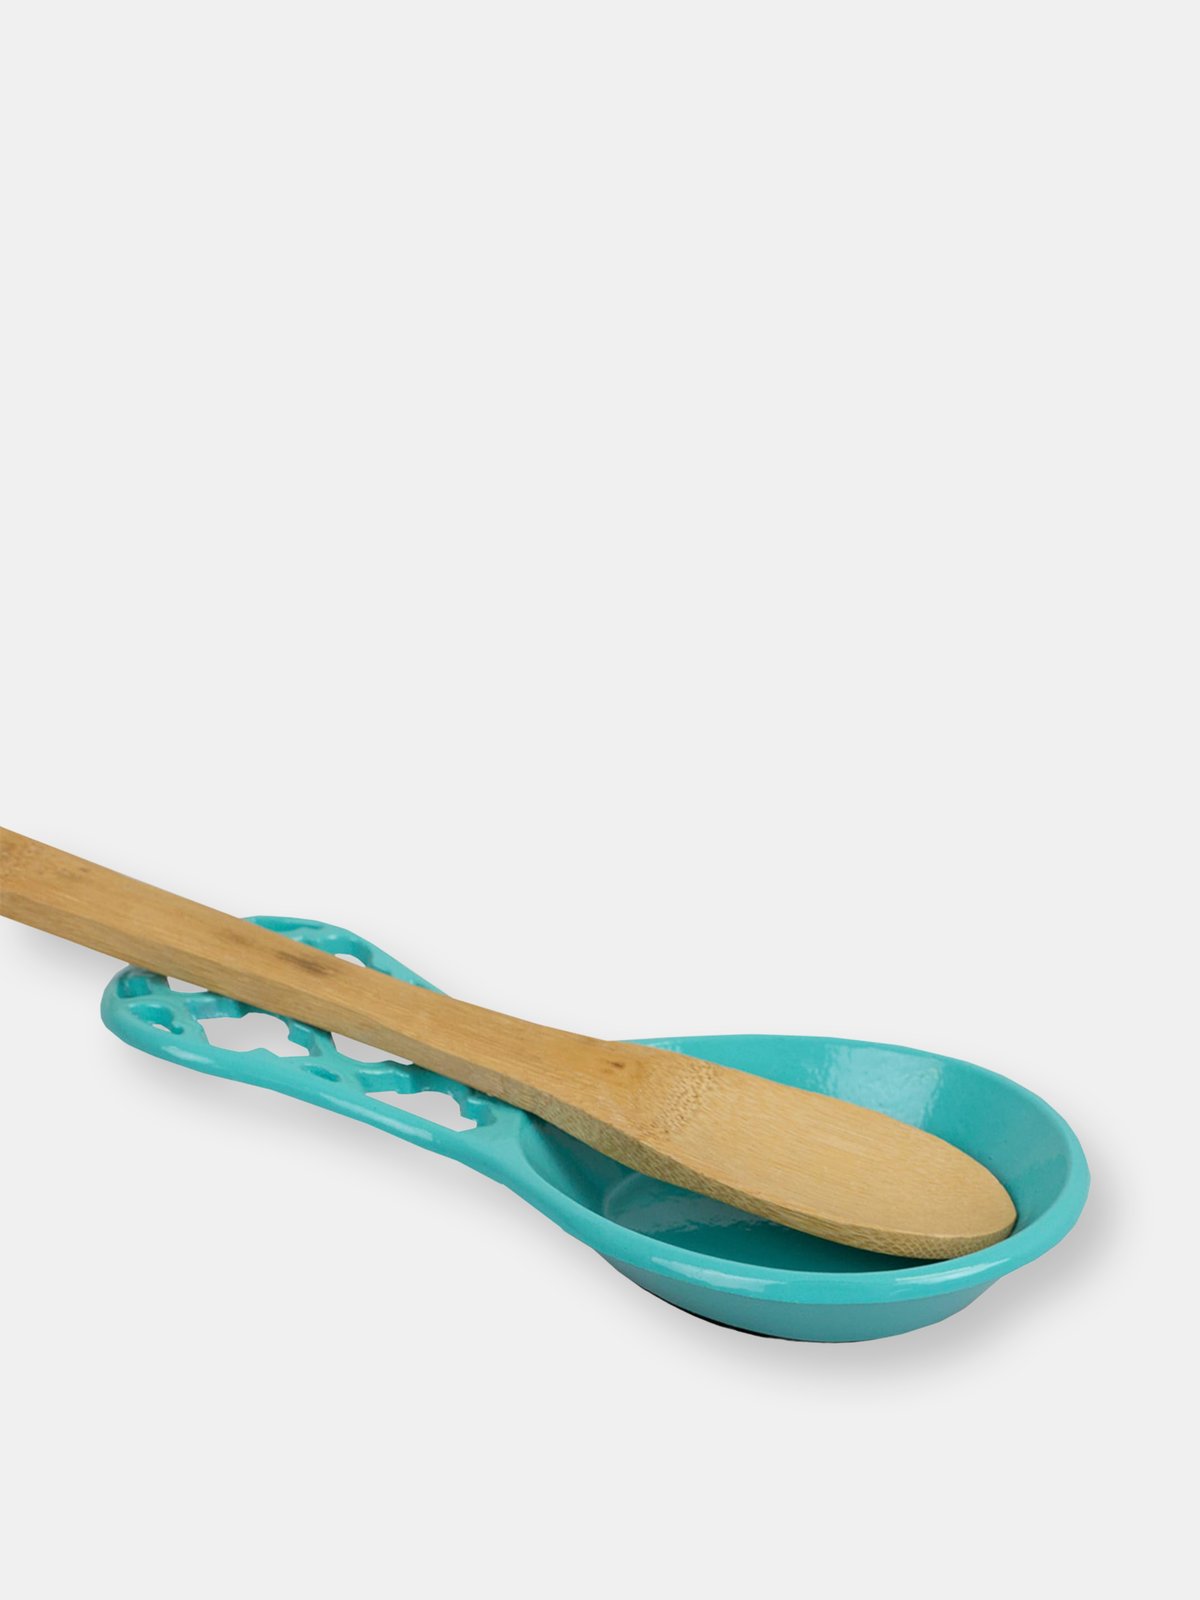 Turquoise Home Basics Lattice Collection Cast Iron Spoon Rest